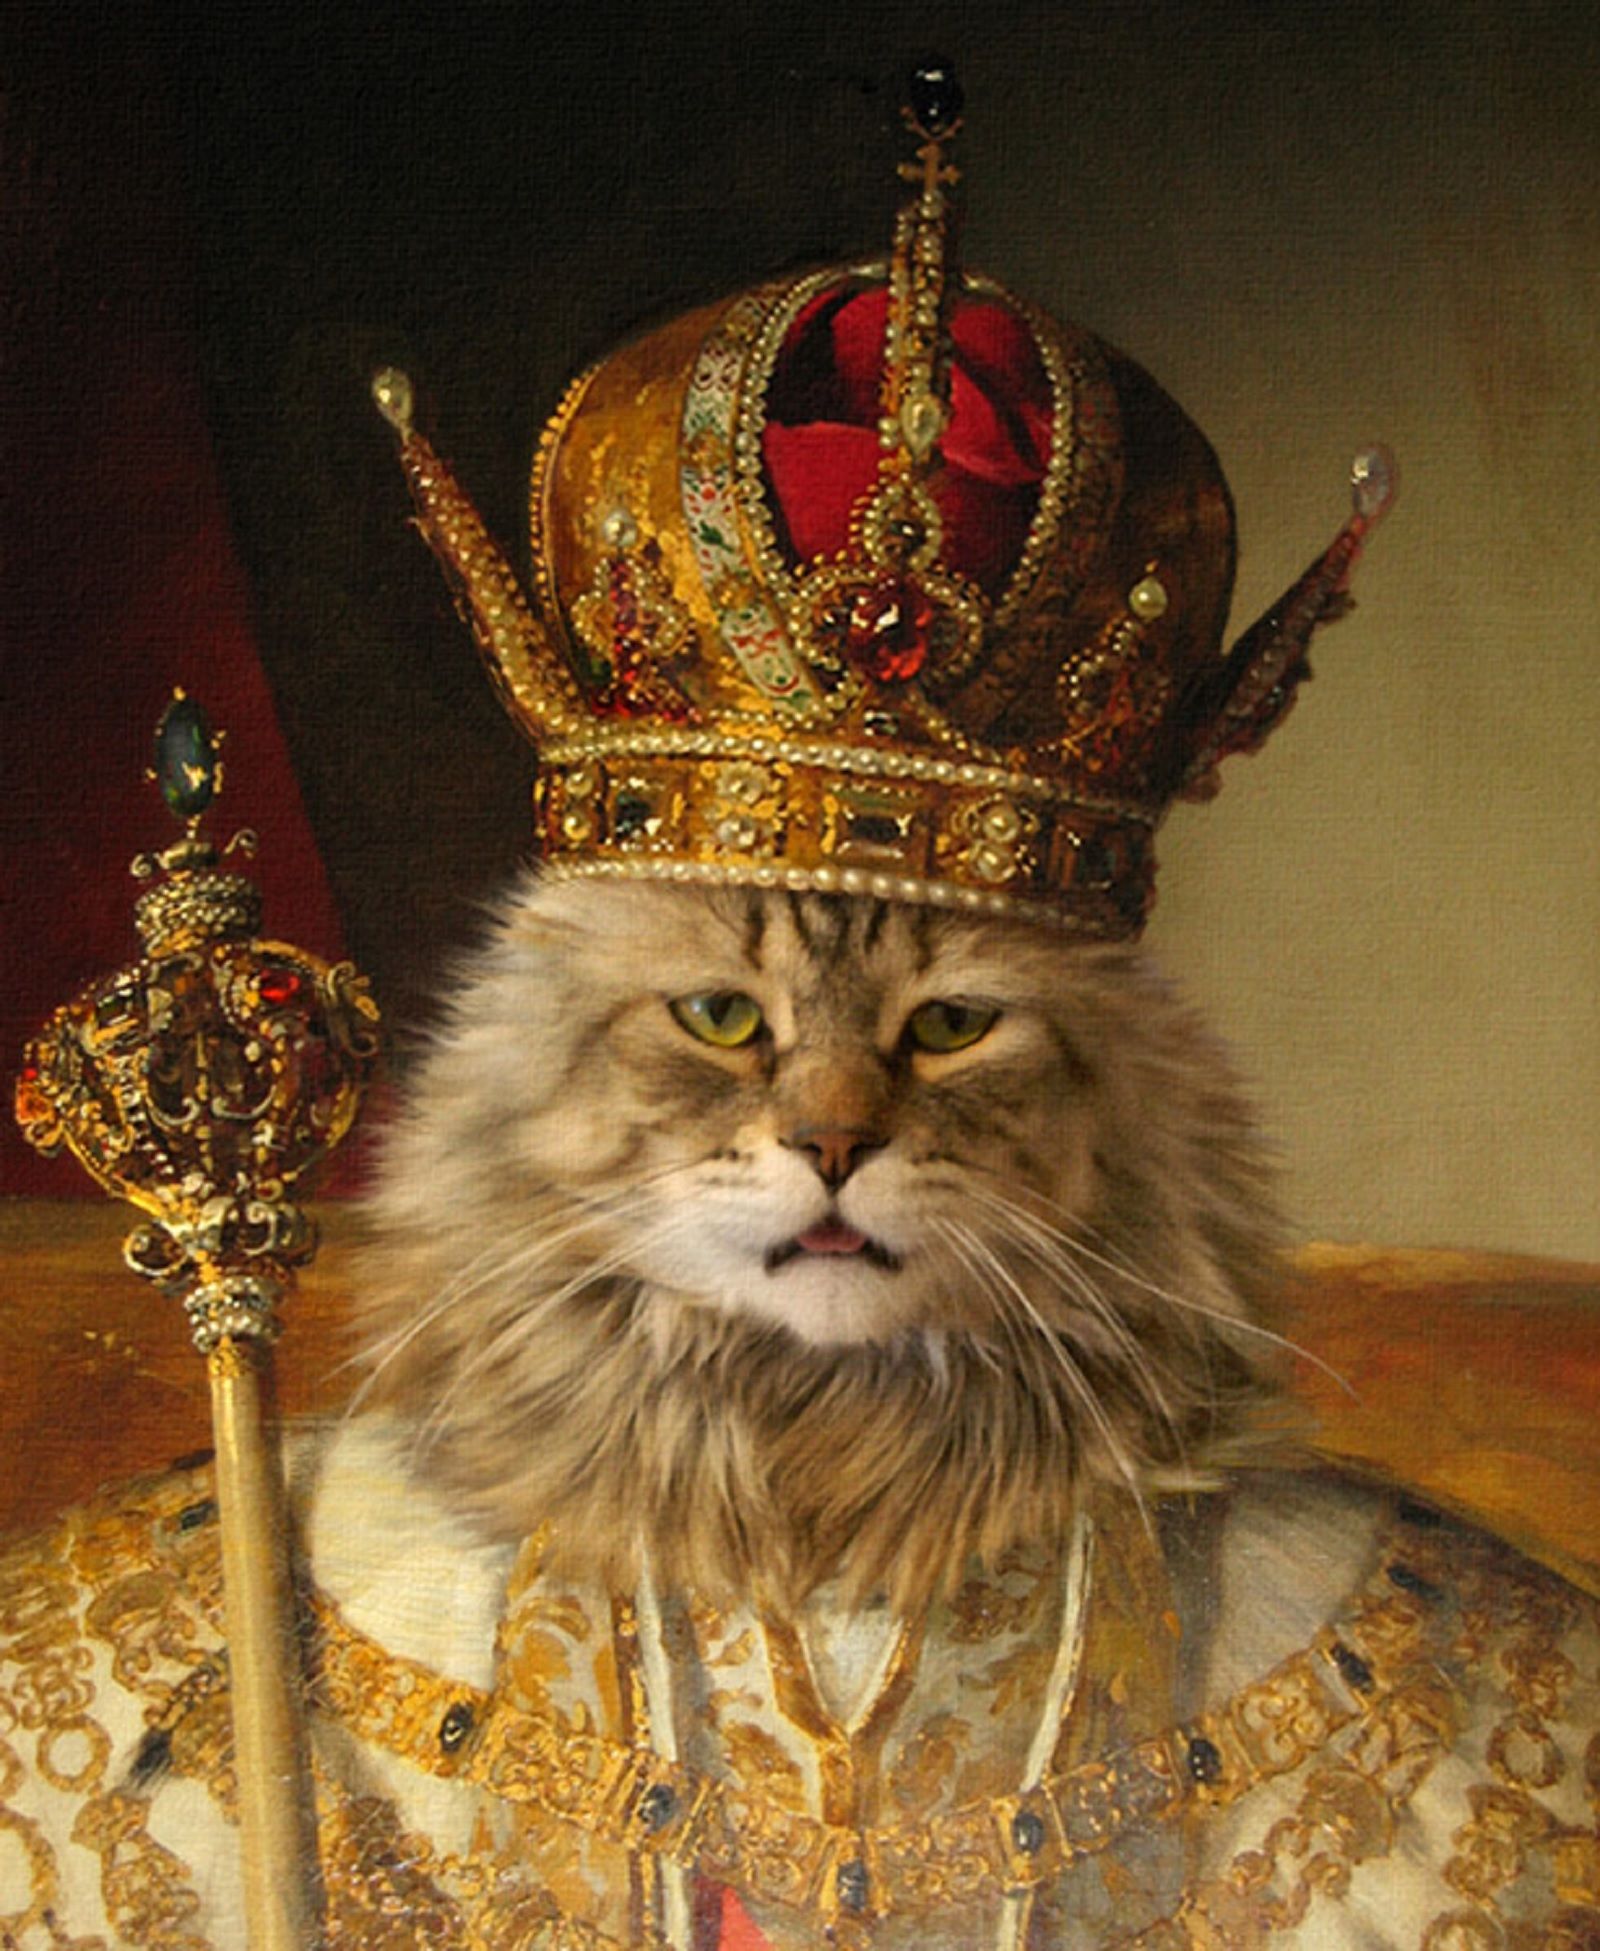 Amusing Images Of Animals Photoshopped Into Renaissance Paintings image 19